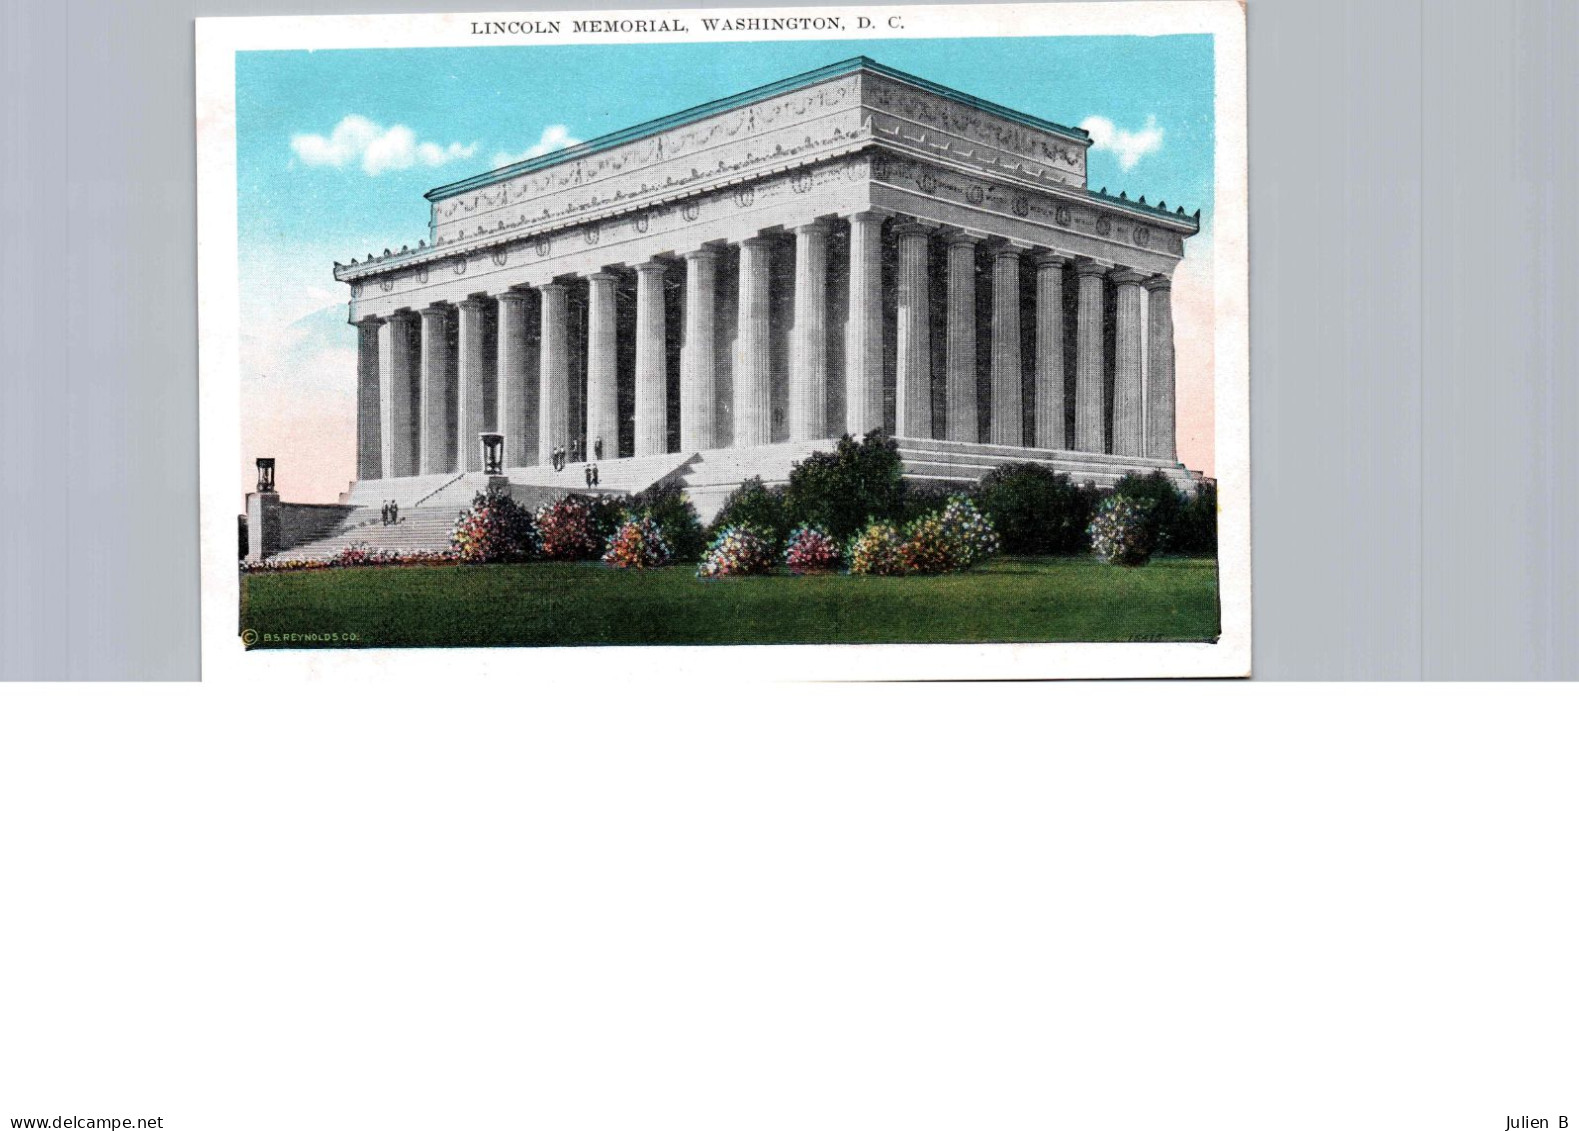 Washington DC, Lincoln Memorial - Washington DC